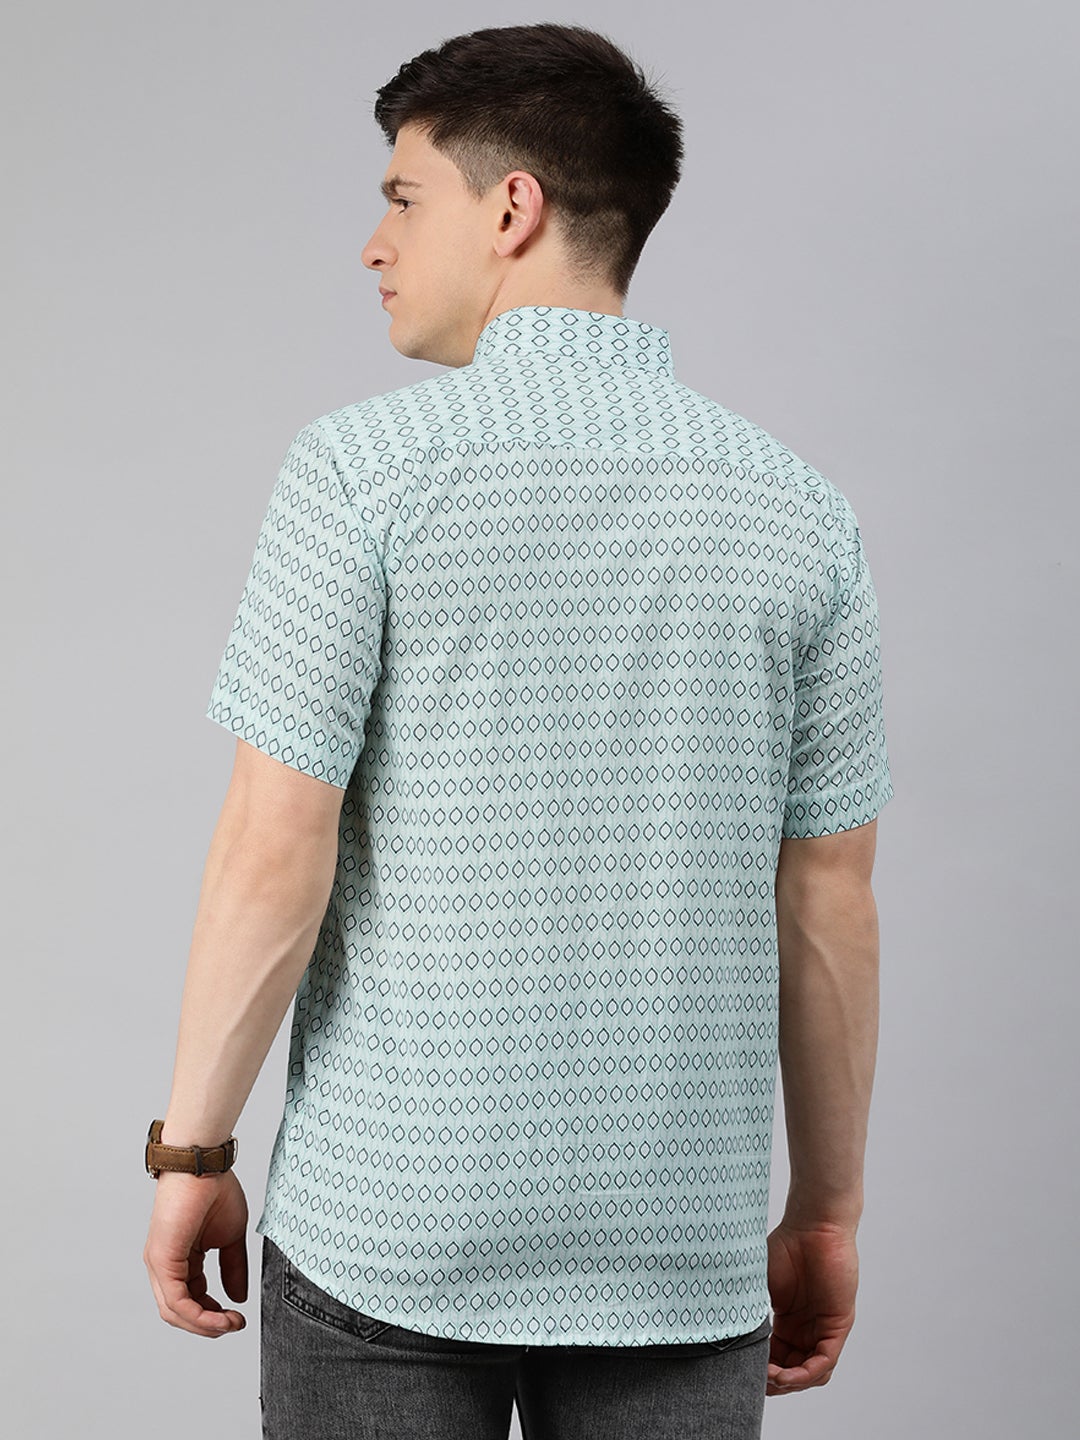 Sea Green Cotton Short Sleeves Shirts For Men